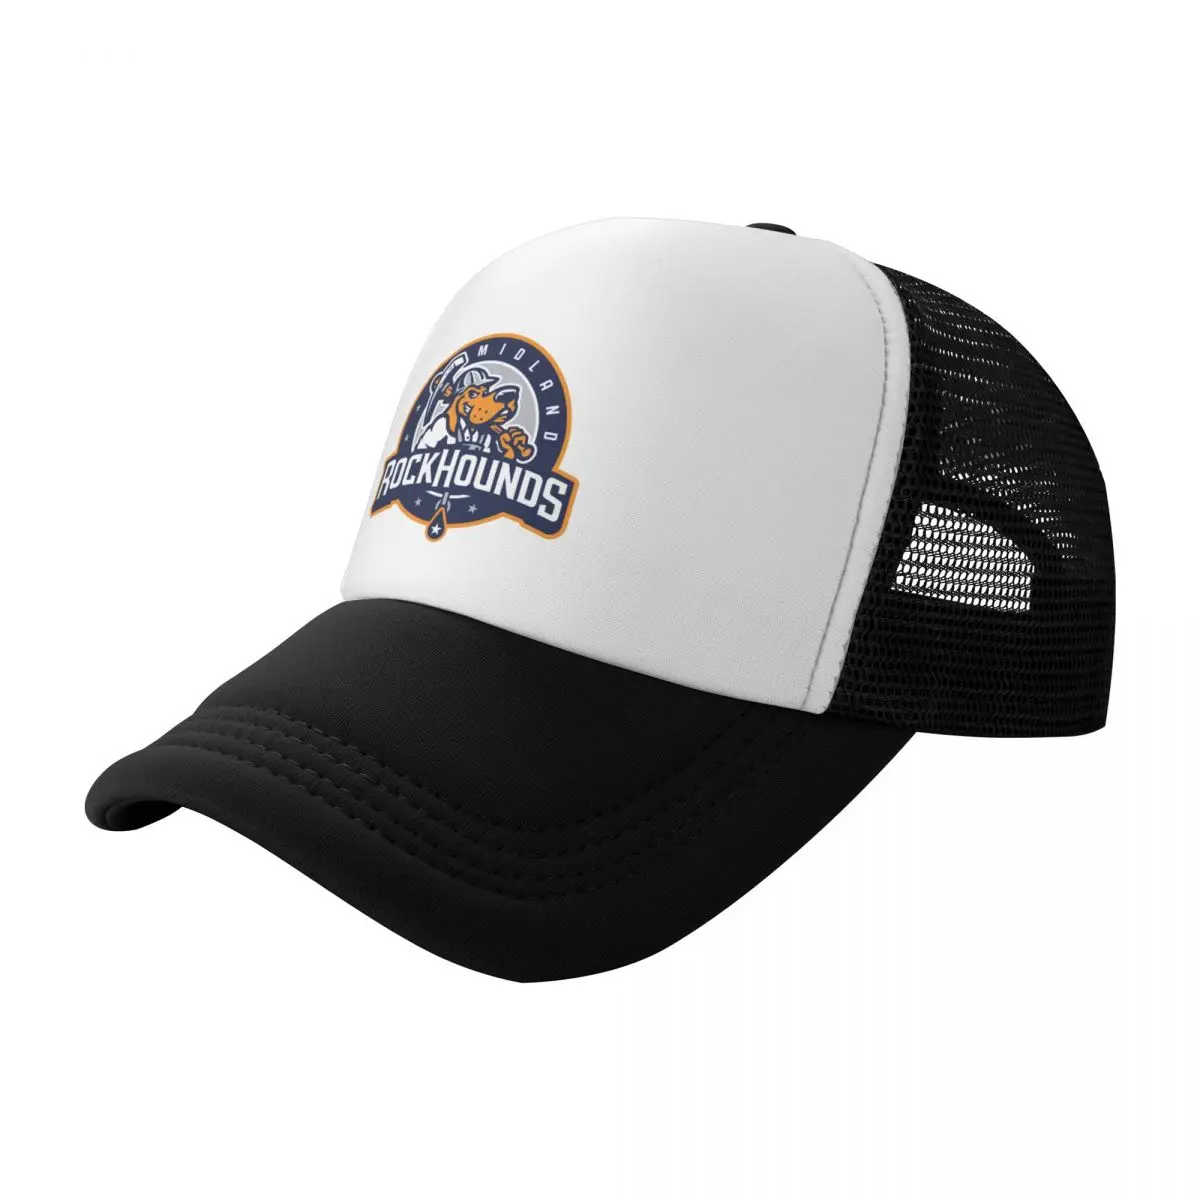 

The Midland Rock Hounds Logo Baseball Cap Ball Cap hiking hat hard hat Hats For Men Women's